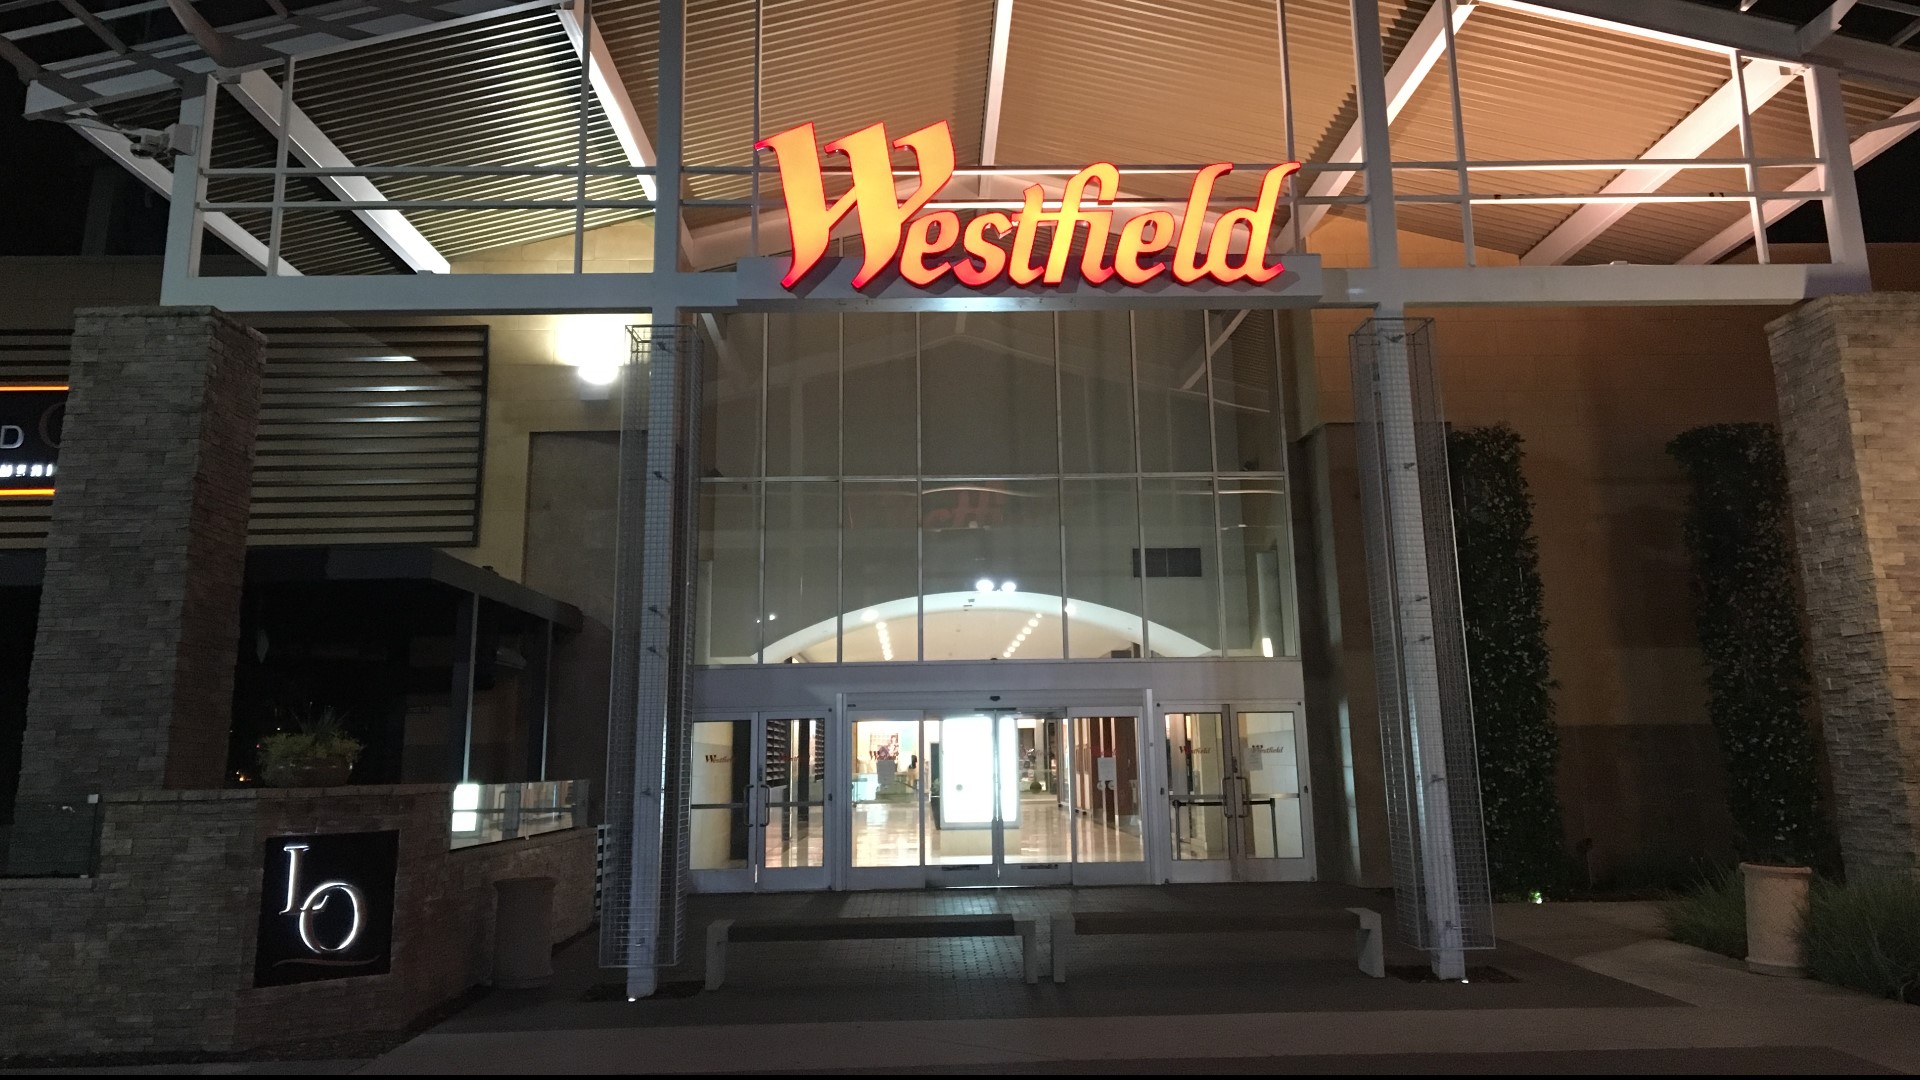 Westfield Galleria, Roseville California 